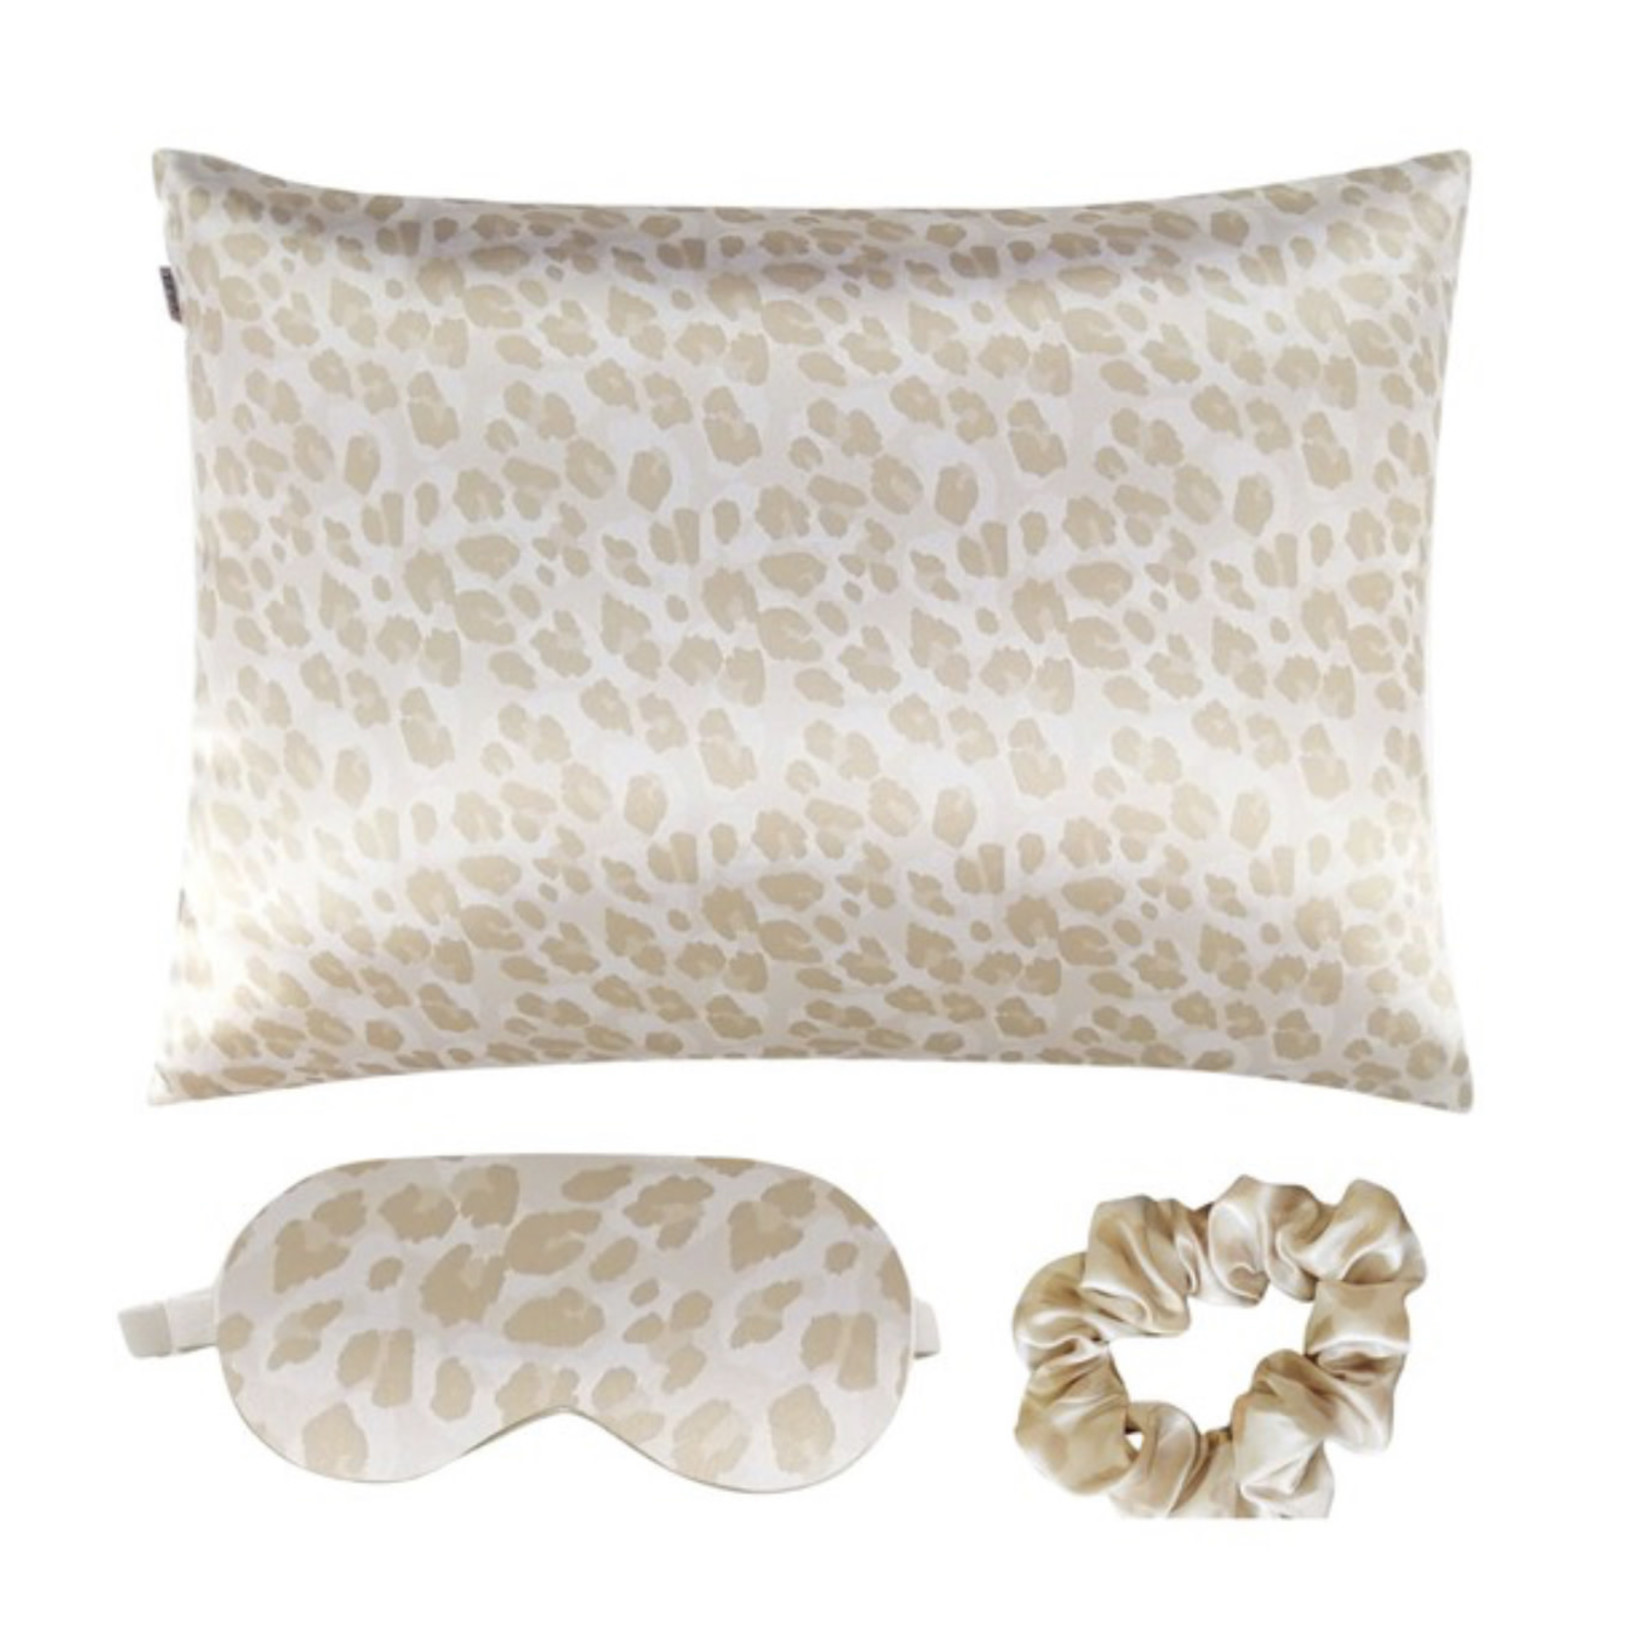 Satin Pillowcase, Sleep Mask & Scrunchie Gift Set-Leopard